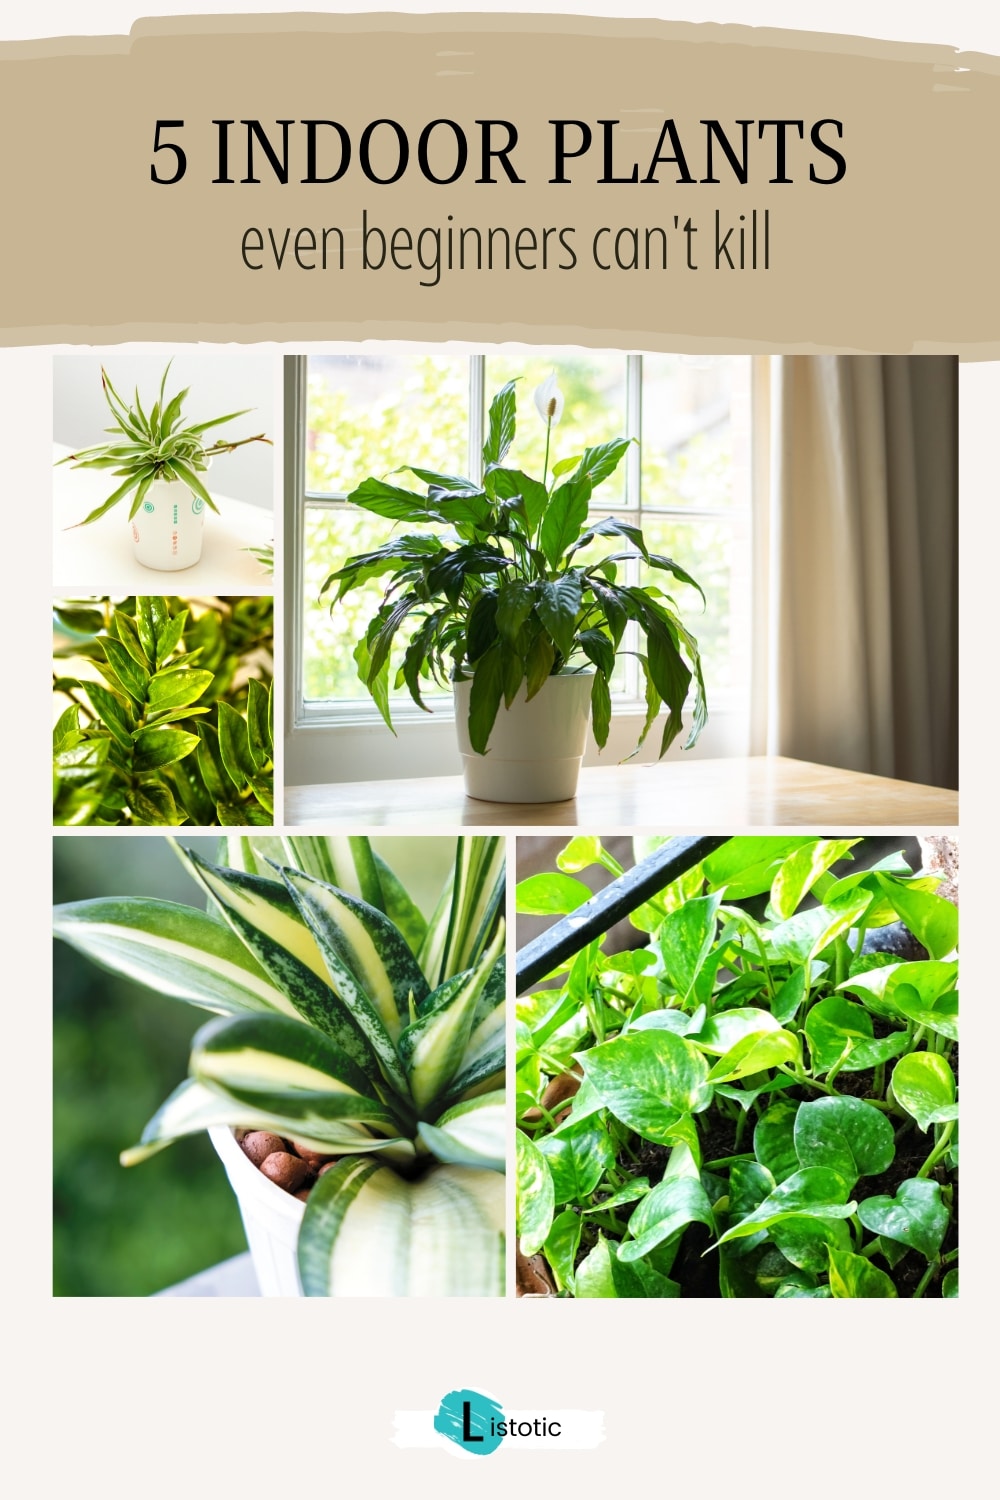 5 easy indoor plants perfect for beginners